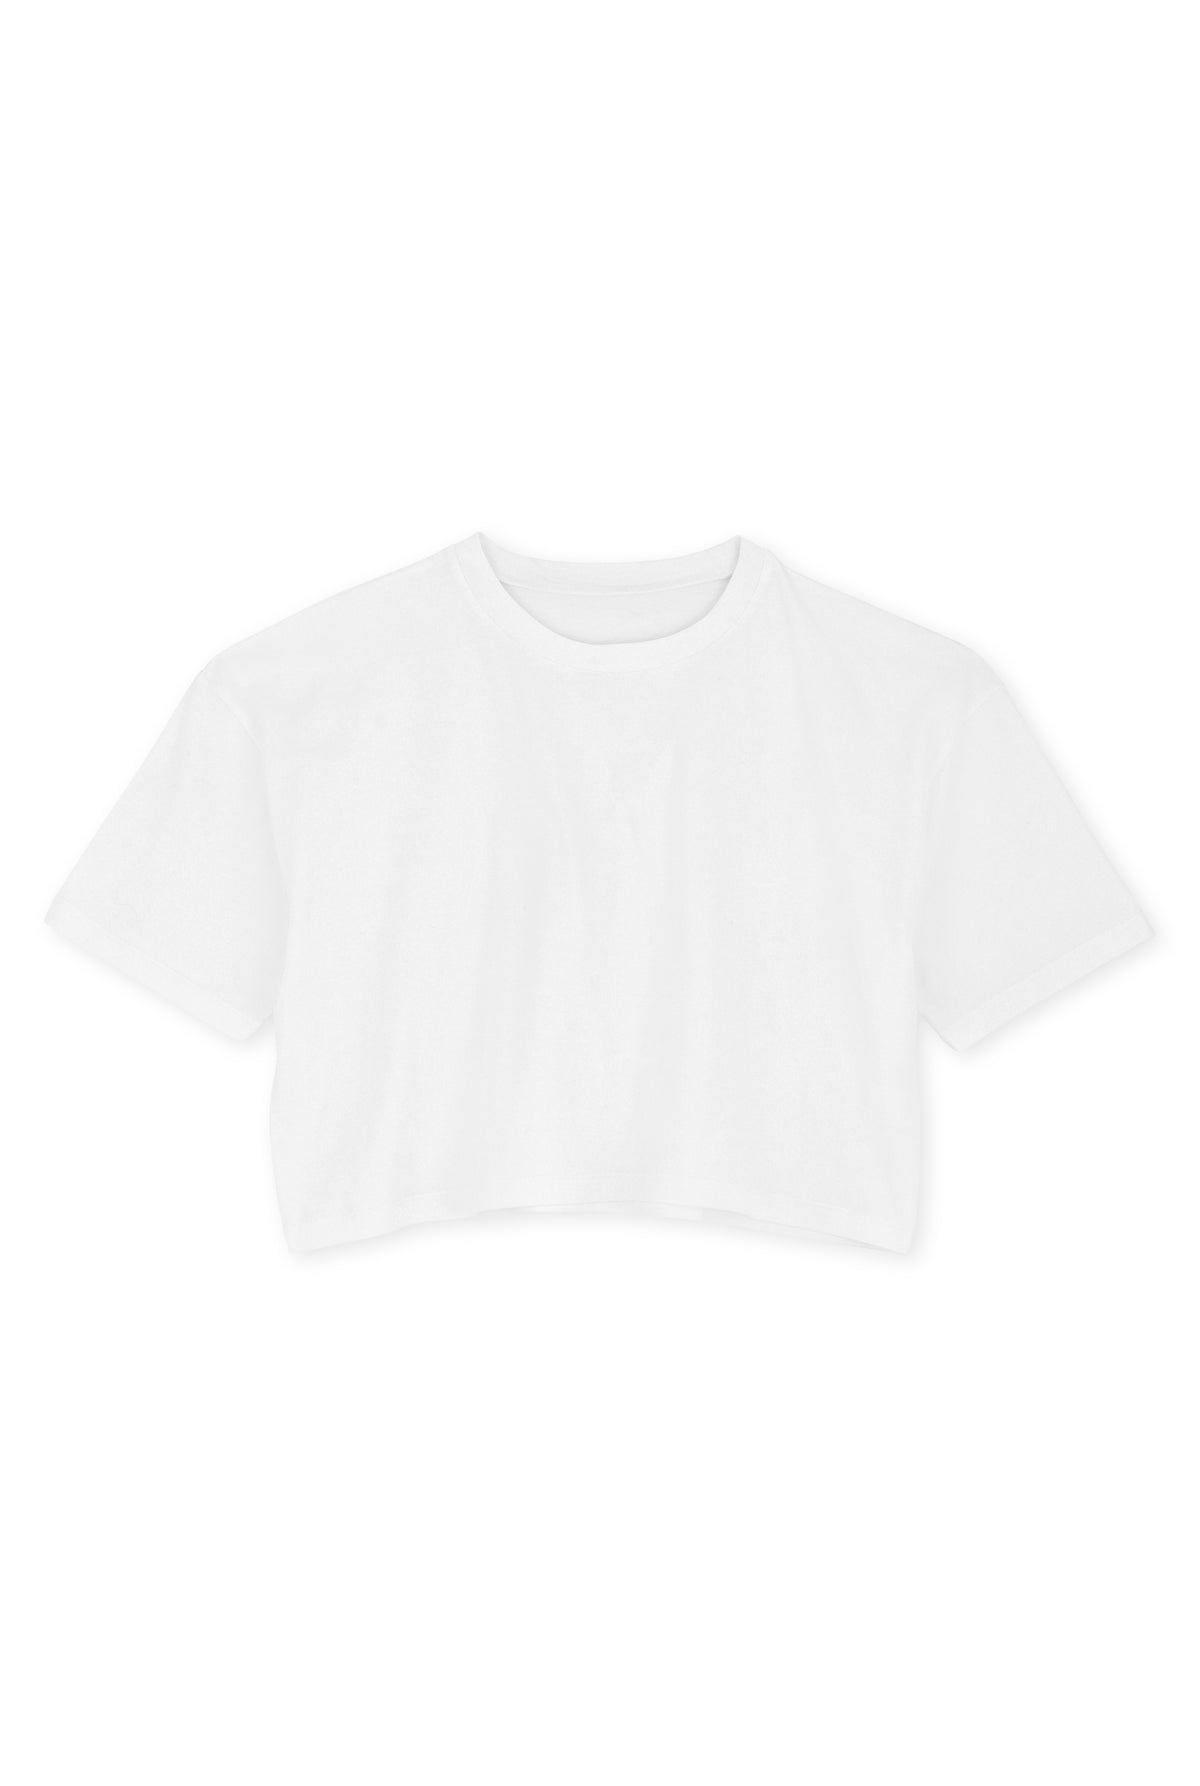 T-shirt coton BIO - Blanc